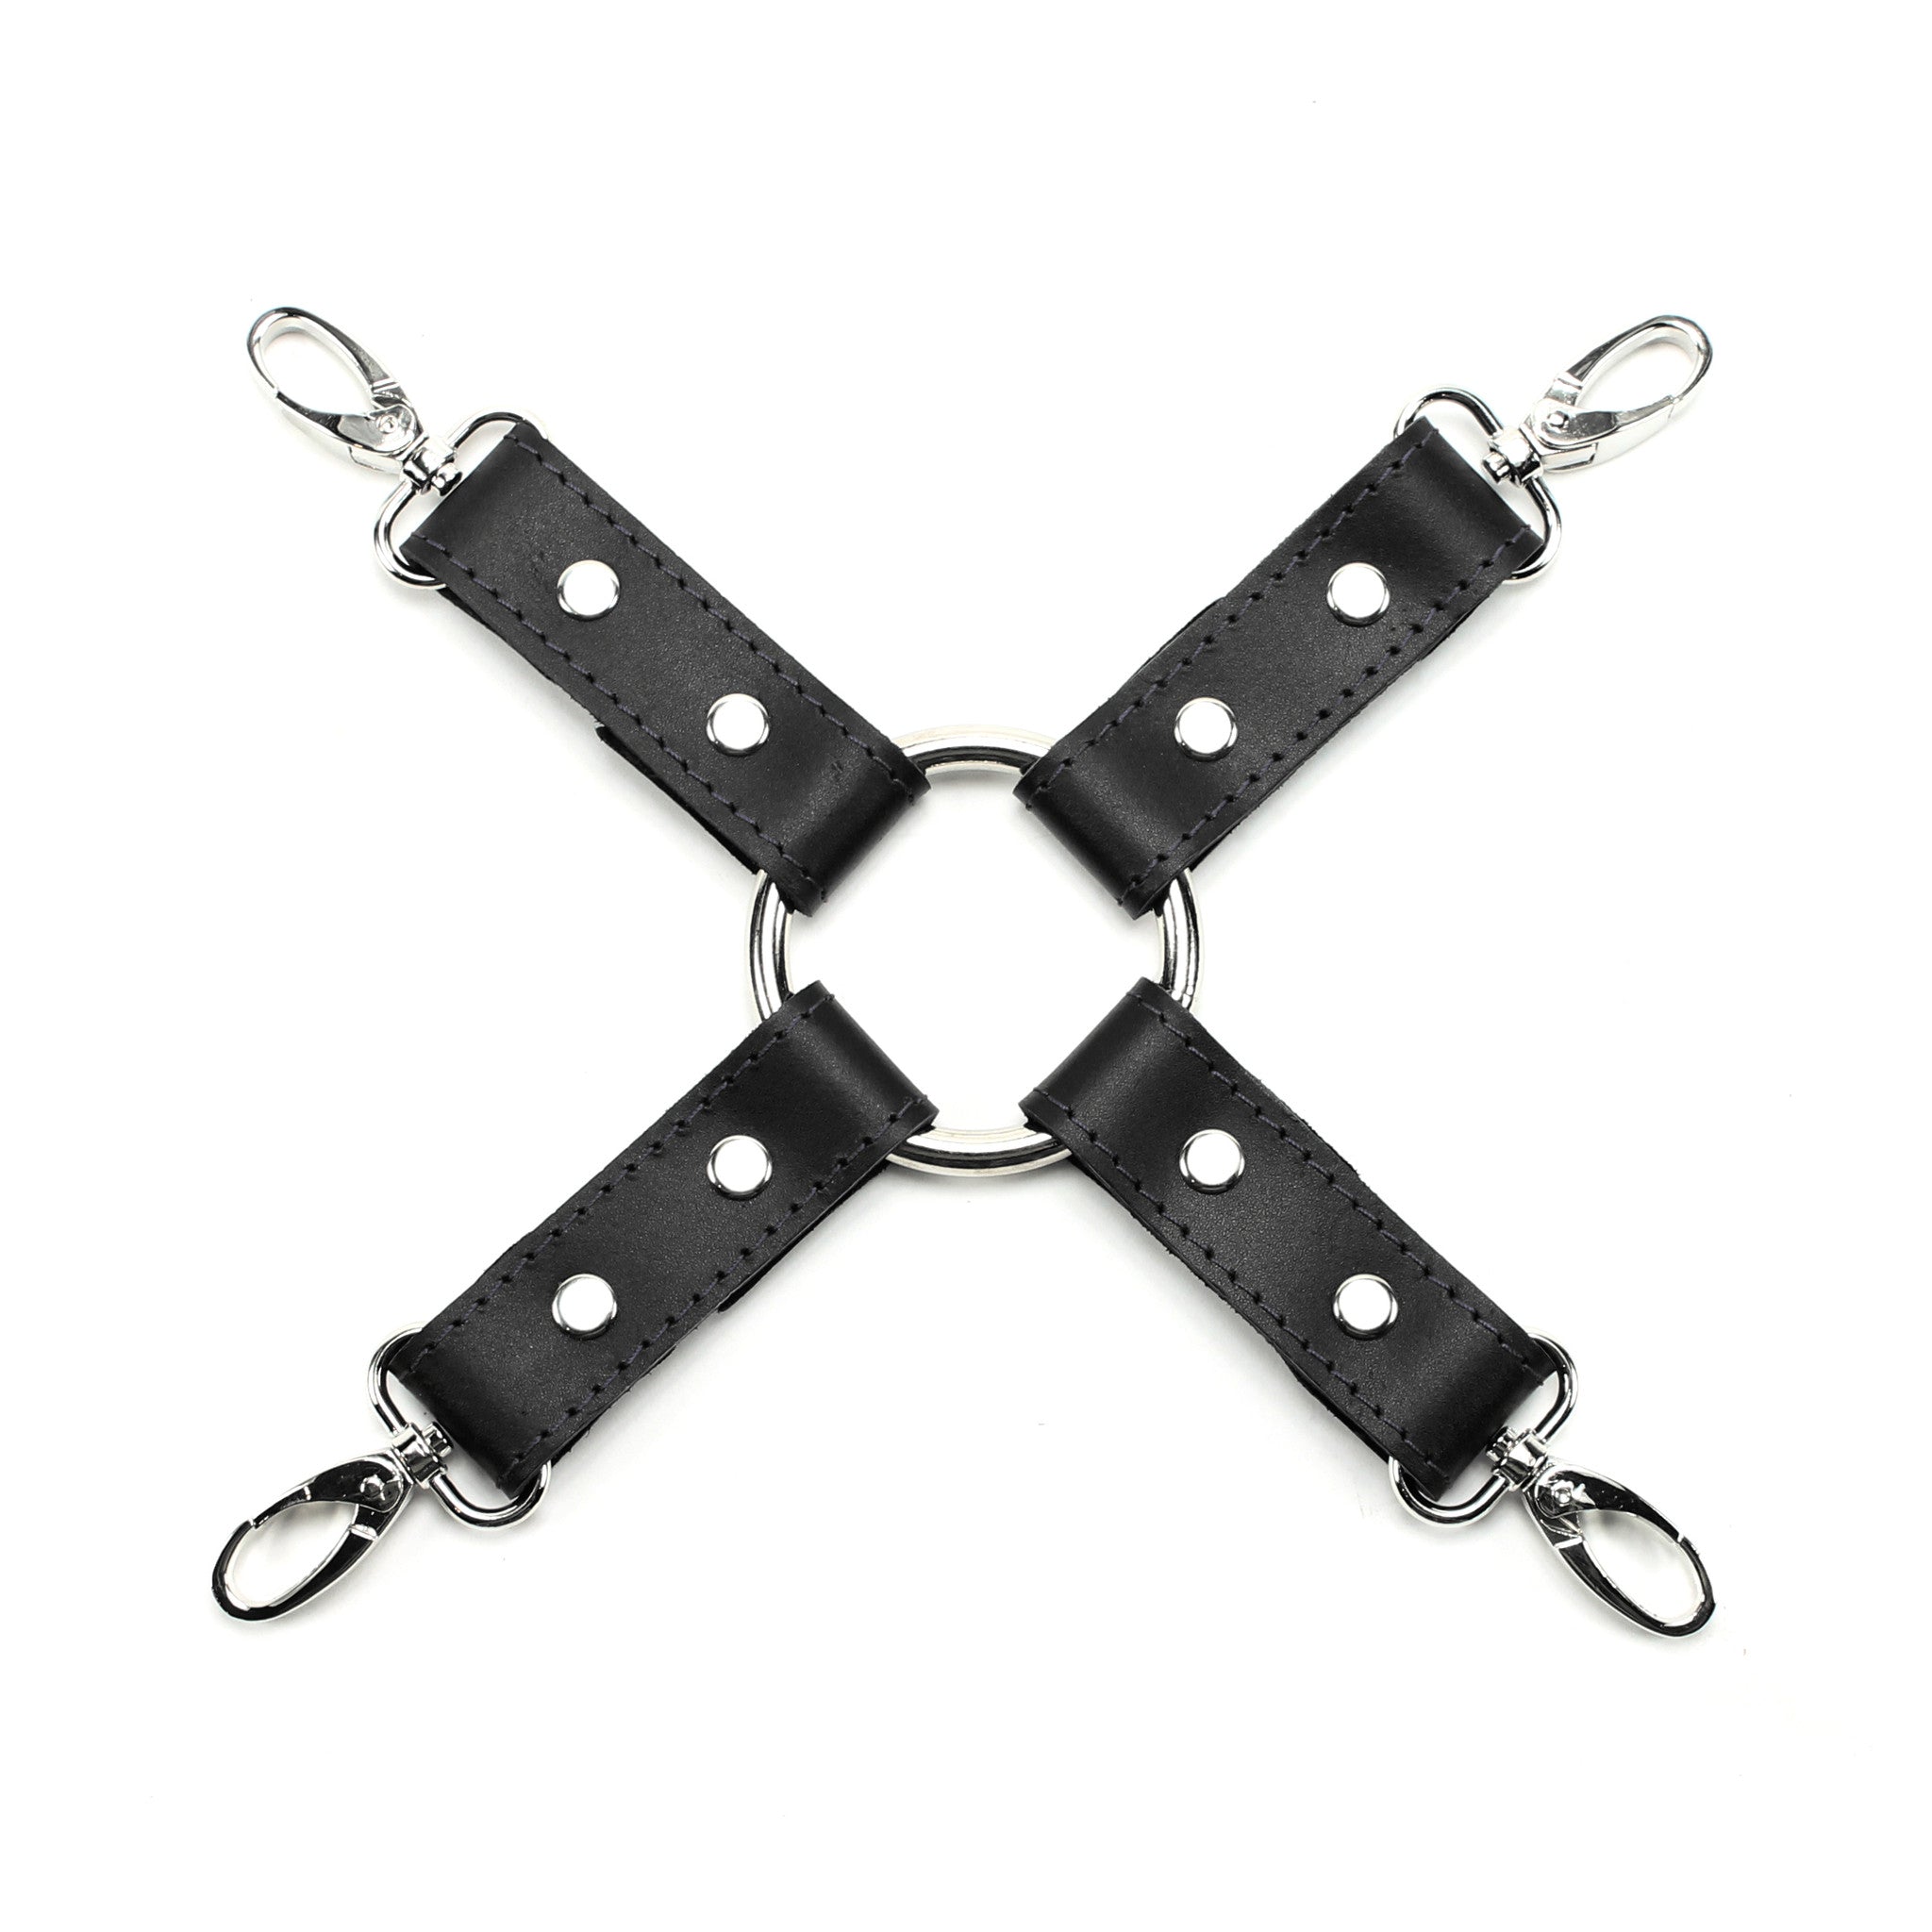 Black and black leather 4-point bondage hogtie